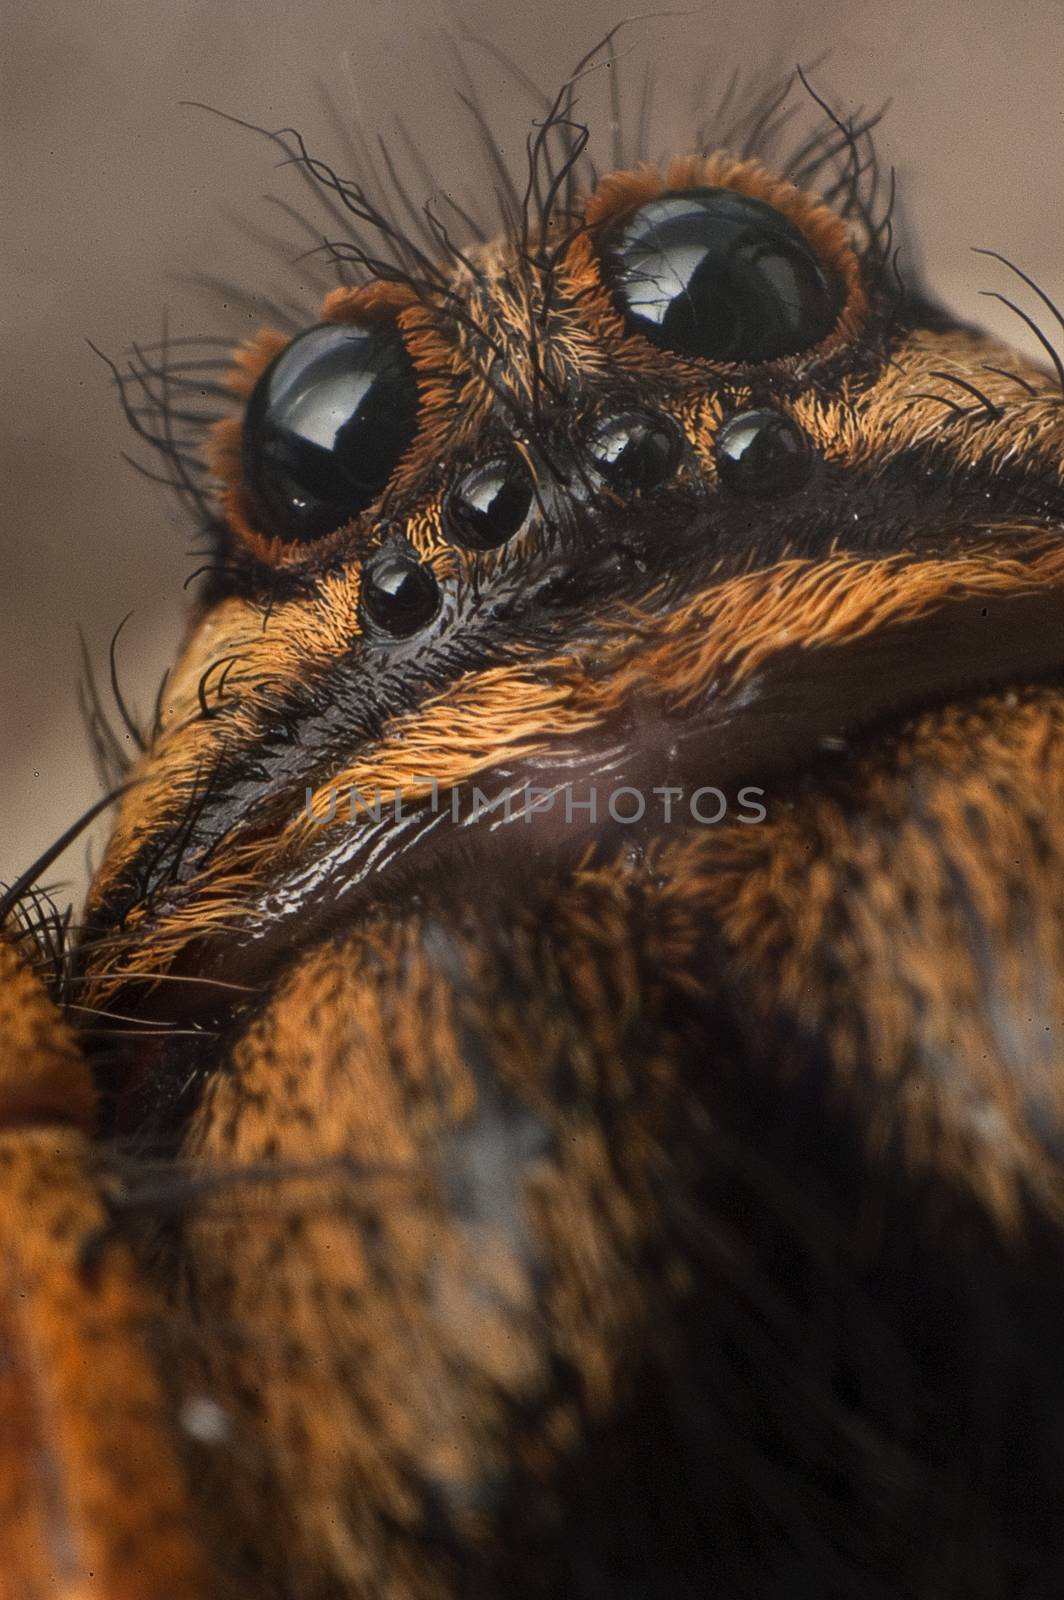 Closeup wolf spider species,Lycosa tarantula by jalonsohu@gmail.com